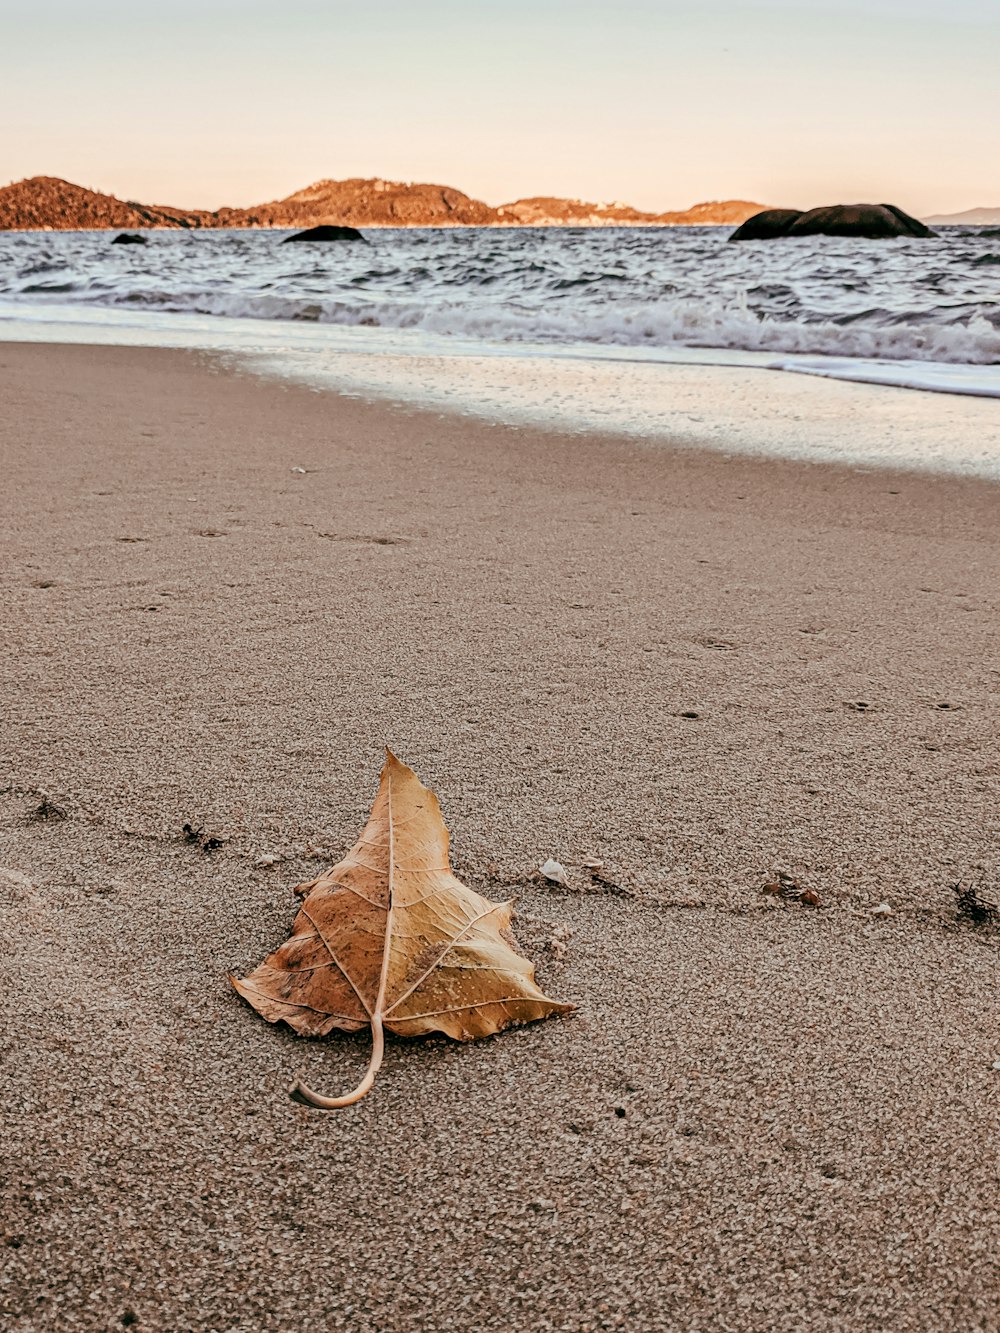 brown leaf on white sand beach during daytime